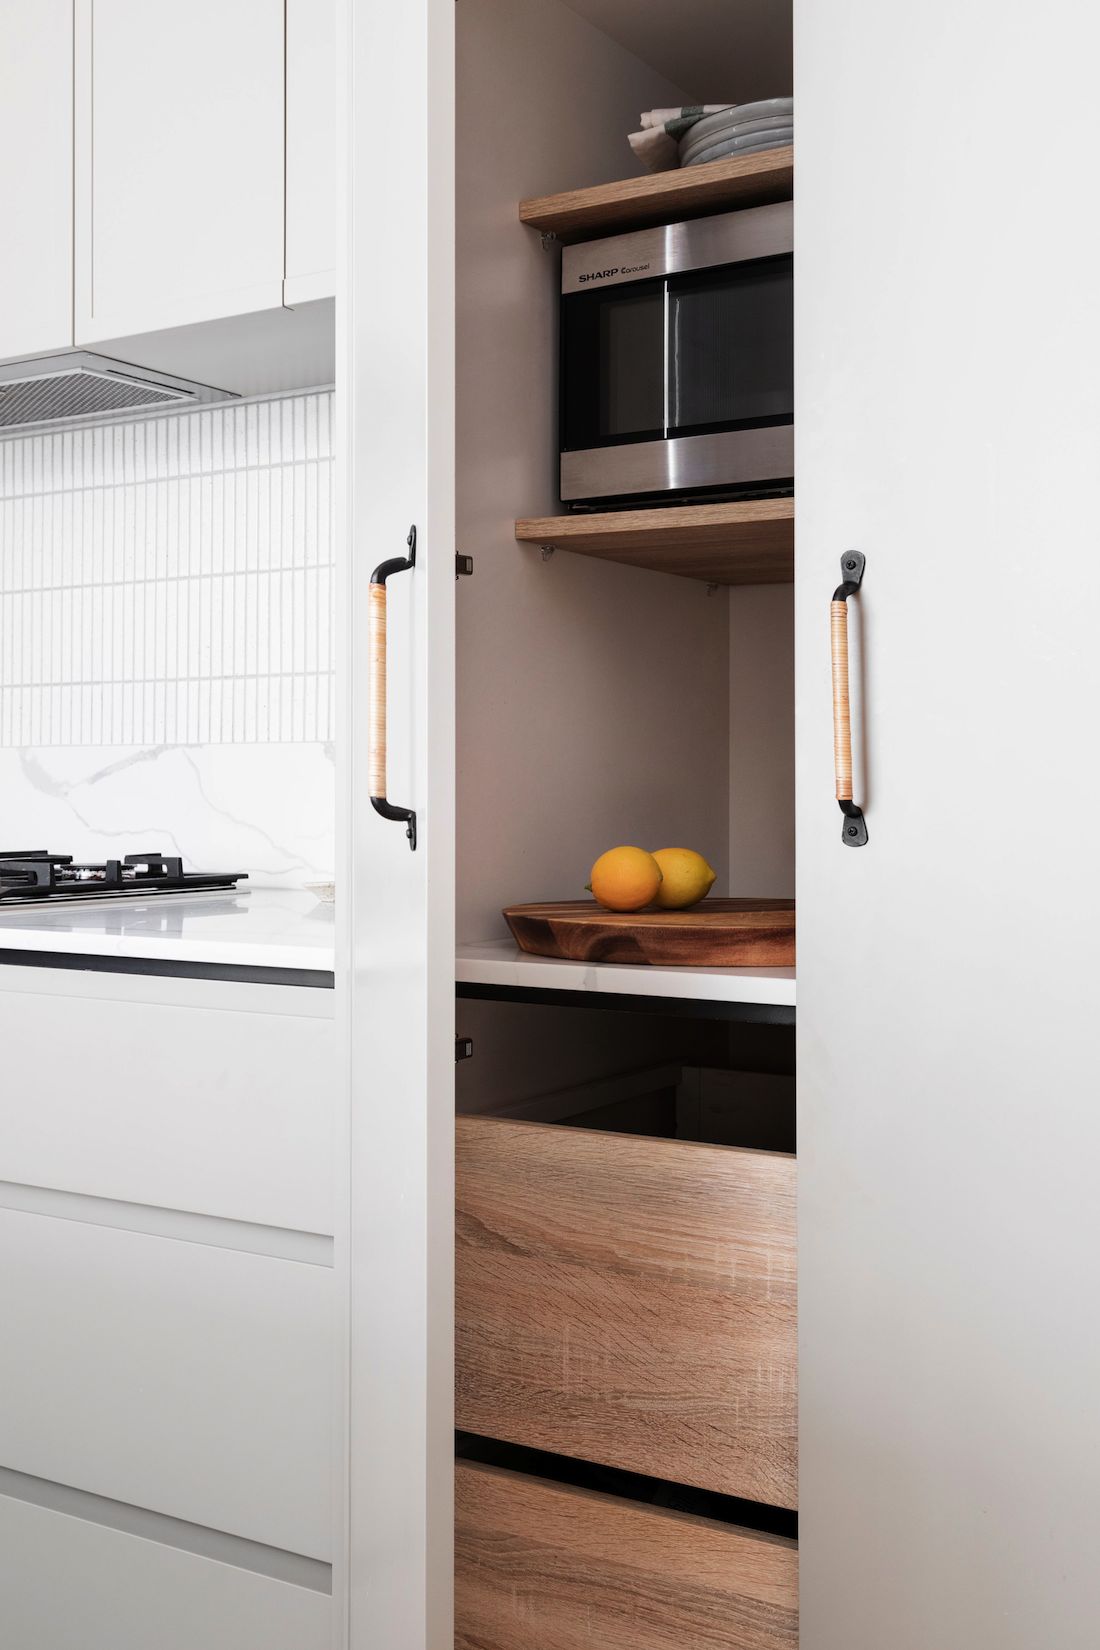 Inside a kitchen pantry kitchen renovation checklist